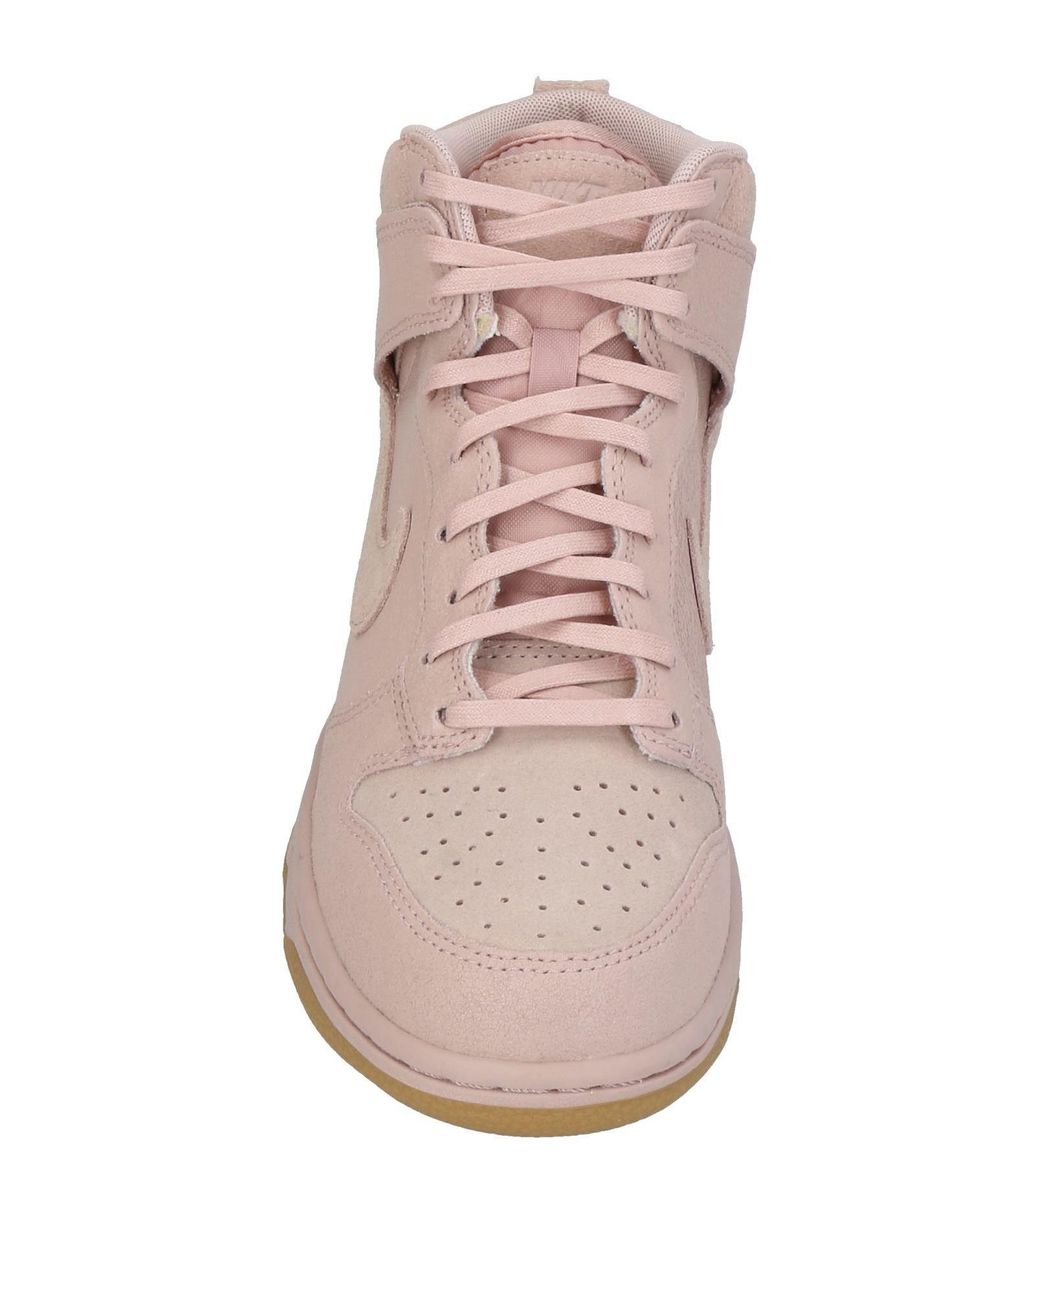 Nike Suede High-tops & Sneakers in Pastel Pink (Pink) | Lyst